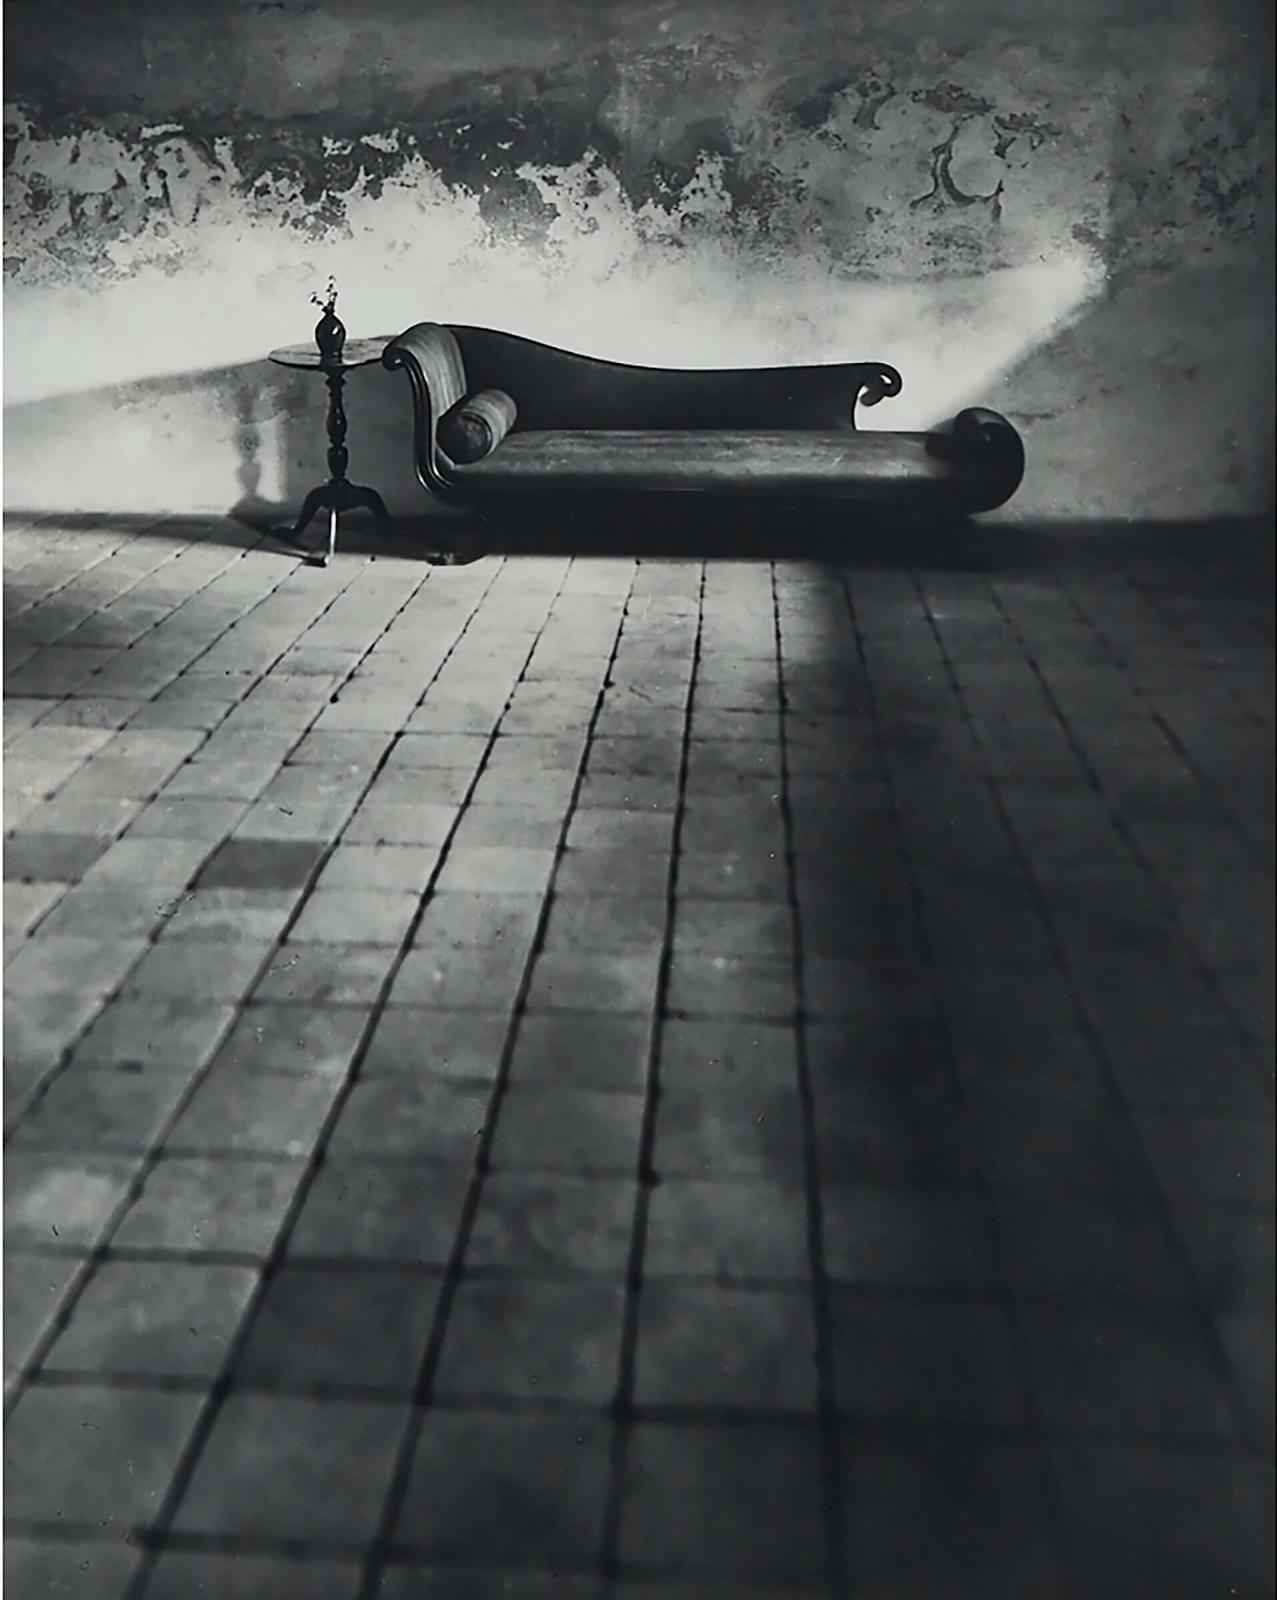 André Kertész (1894-1985) - In The Cellar, Williamsburg, Virginia, 1948